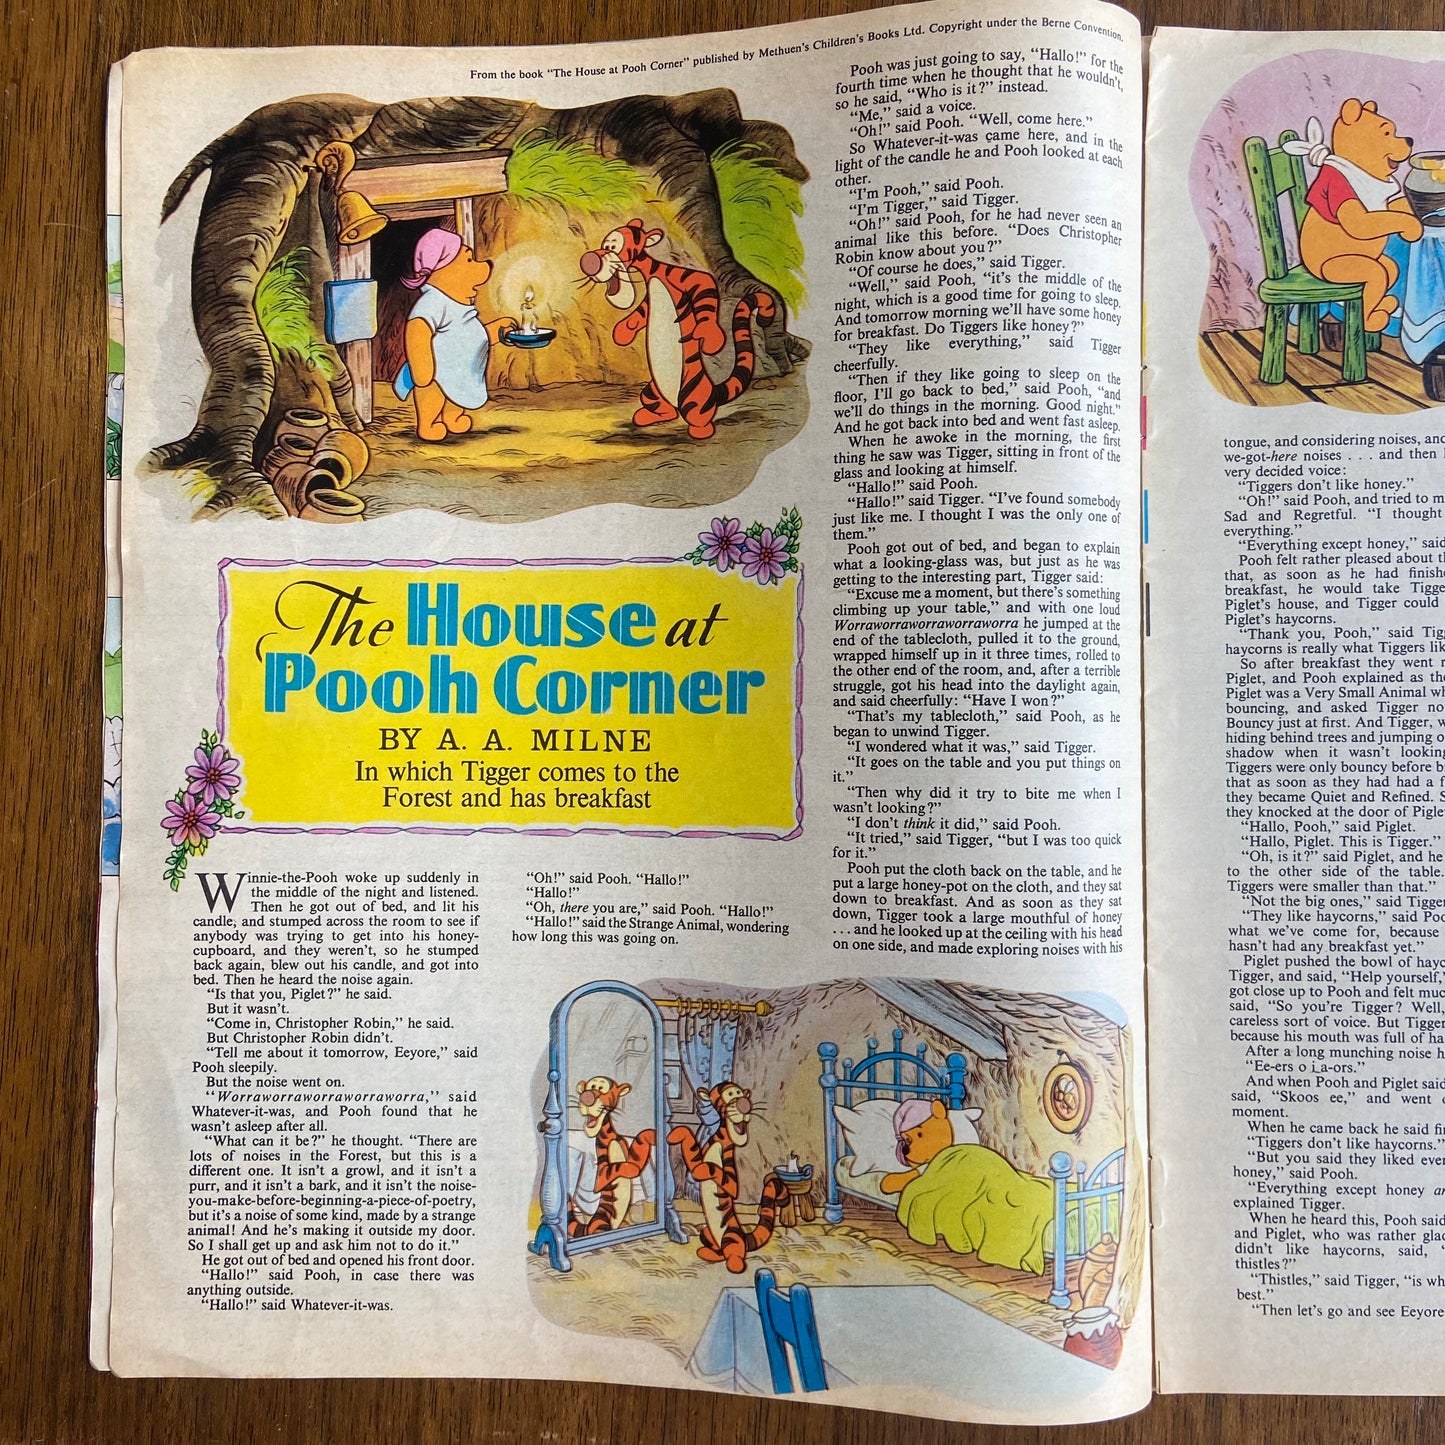 Vintage The Wonderful World of Disney Comic Issue 12